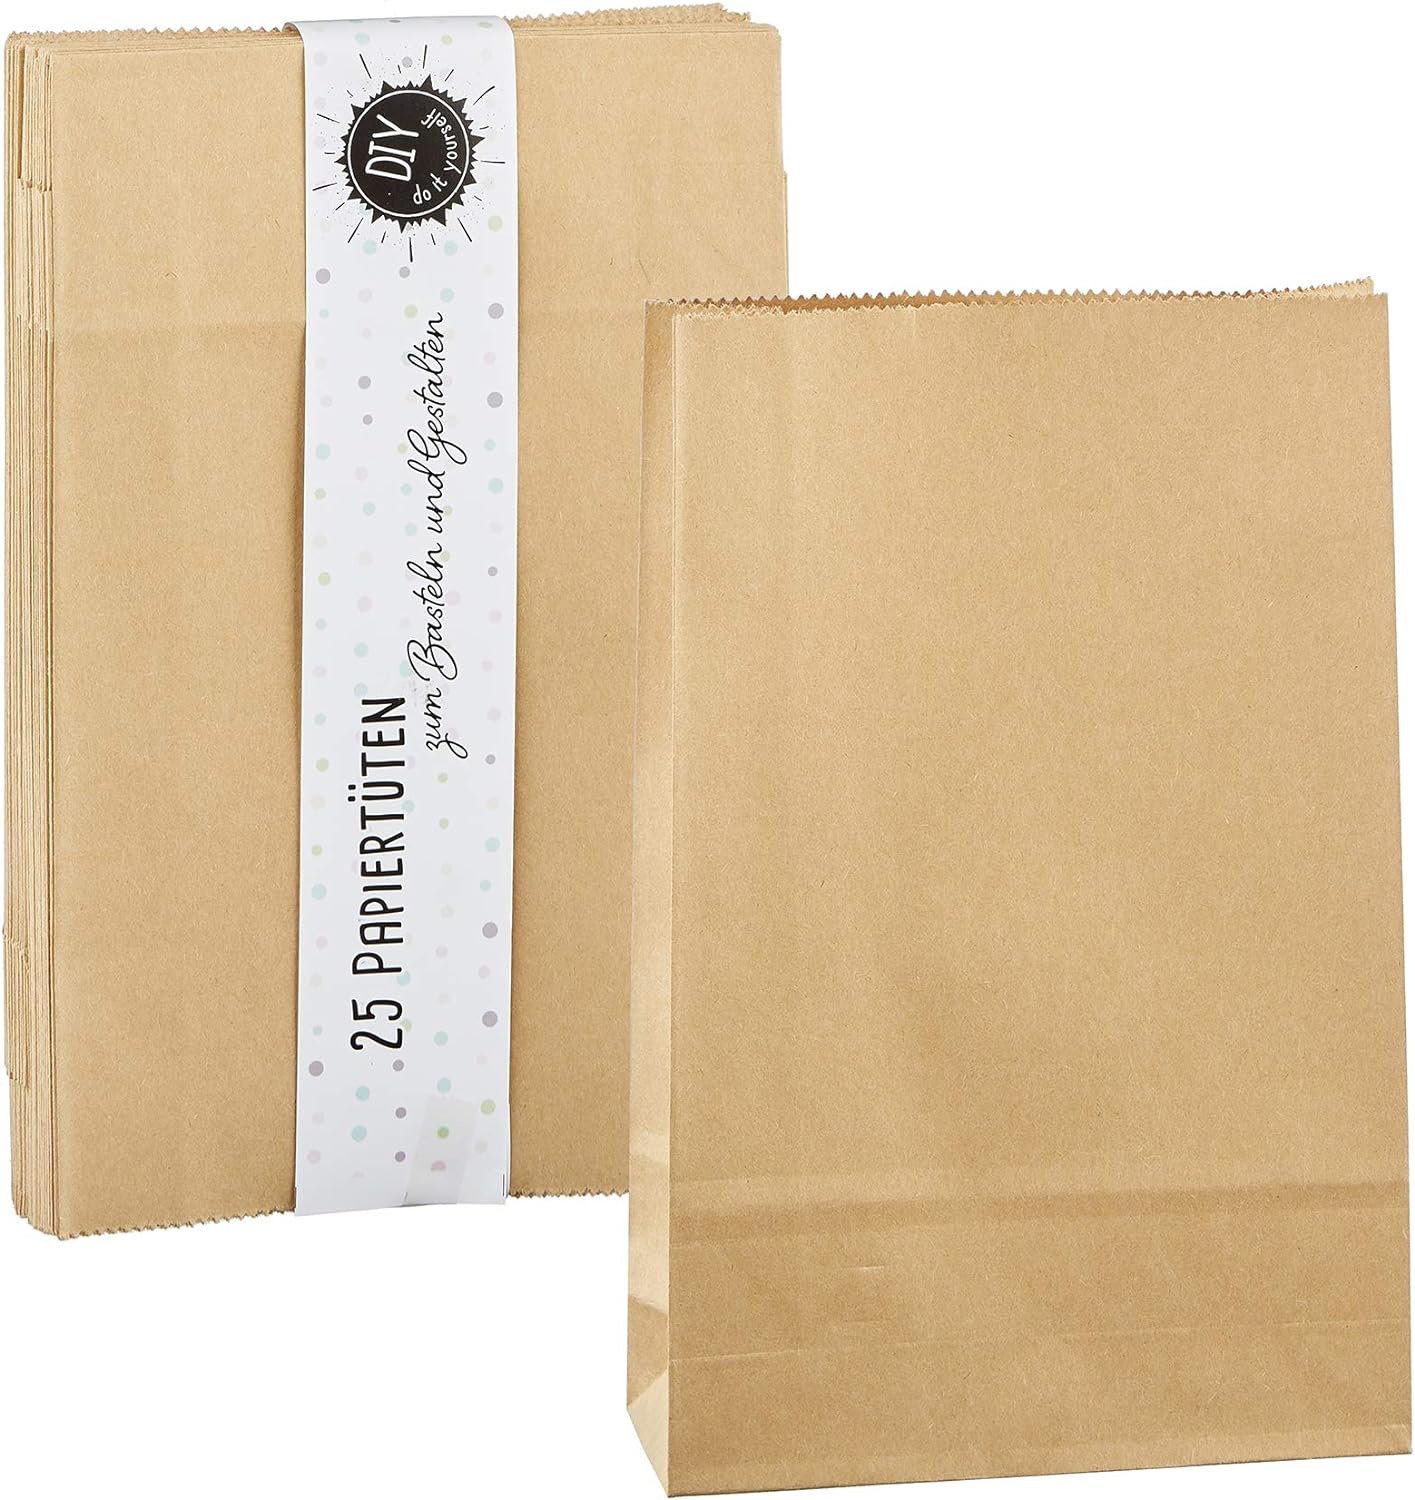 Annastore DIY 25 Paper Bags as Gift Bags or Advent Calendar for Filling - Gift Bags